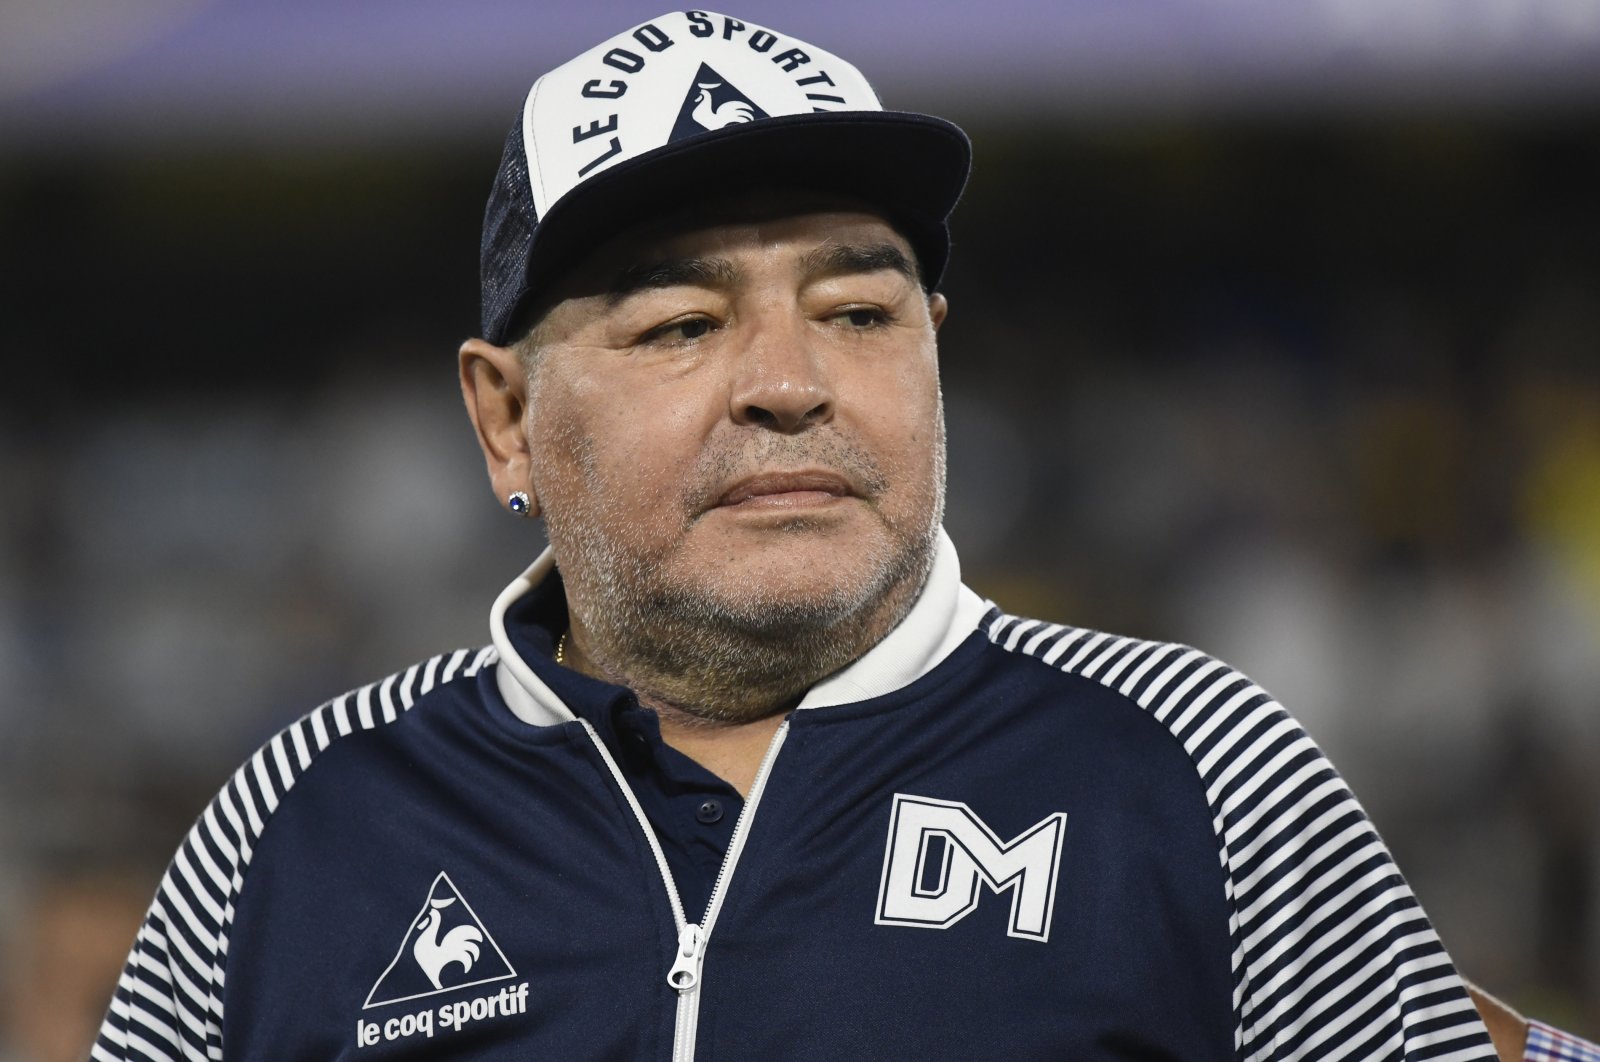 The late Diego Armando Maradona prior to a Superliga 2019/20 match at Alberto J. Armando Stadium, Buenos Aires, Argentina, March 7, 2020. (Getty Images Photo)